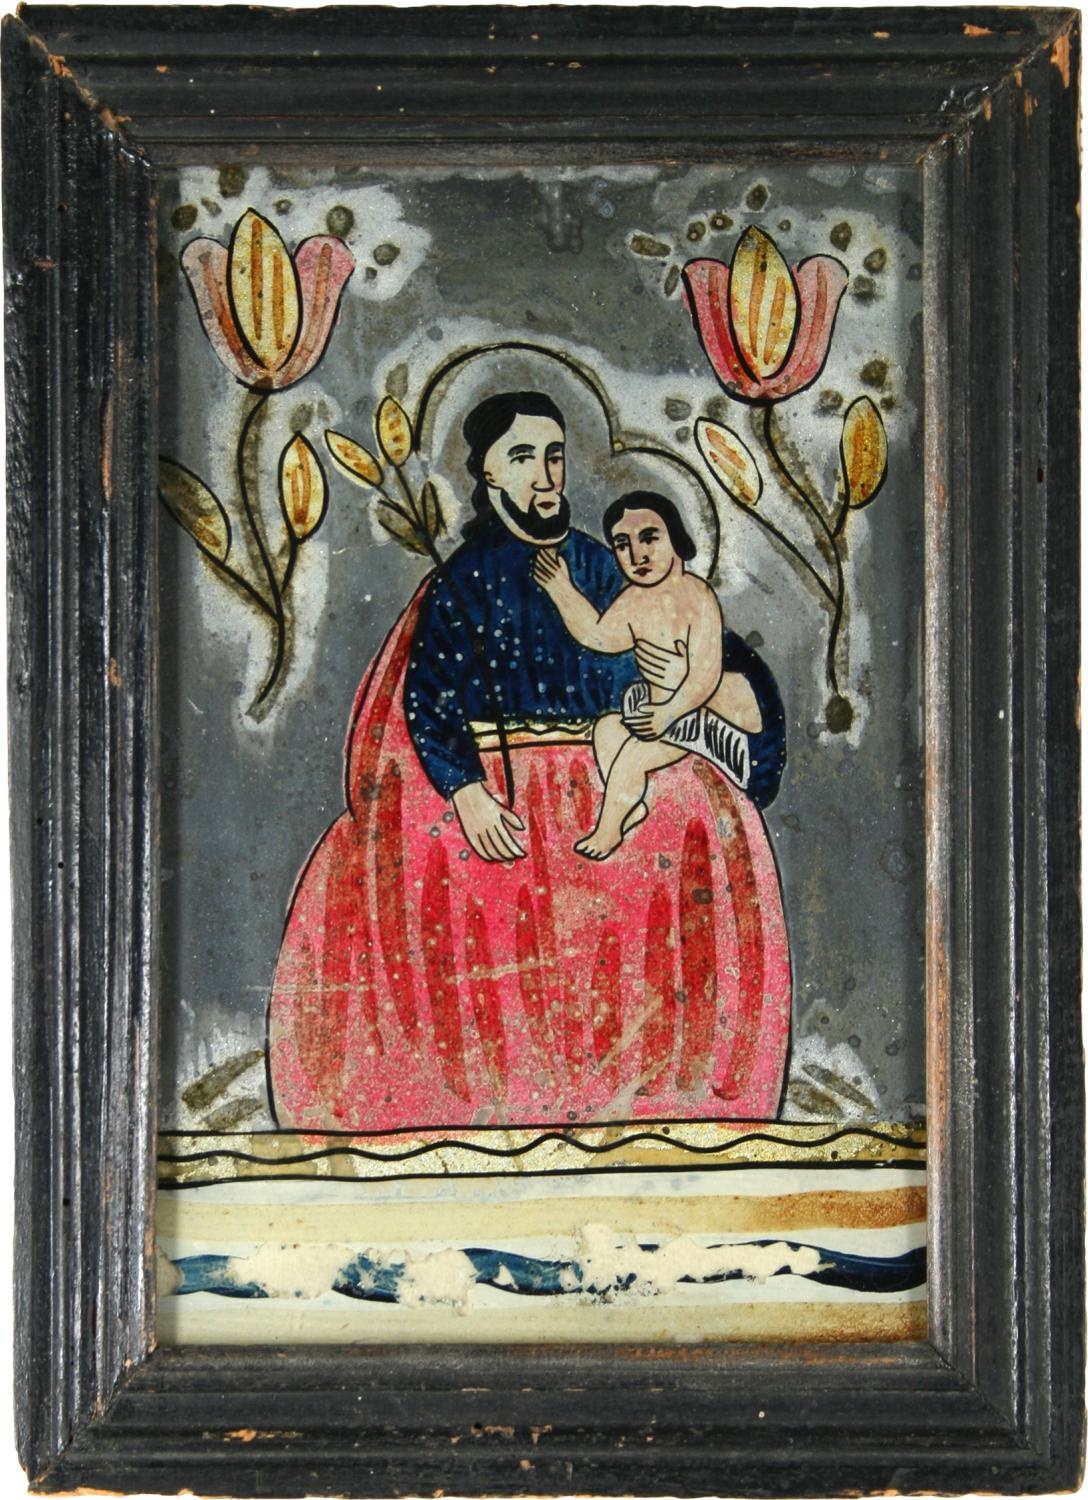 Hl. Joseph mit dem Jesuskind (Altertumsverein 1851 e.V. Riedlingen CC BY-NC-SA)